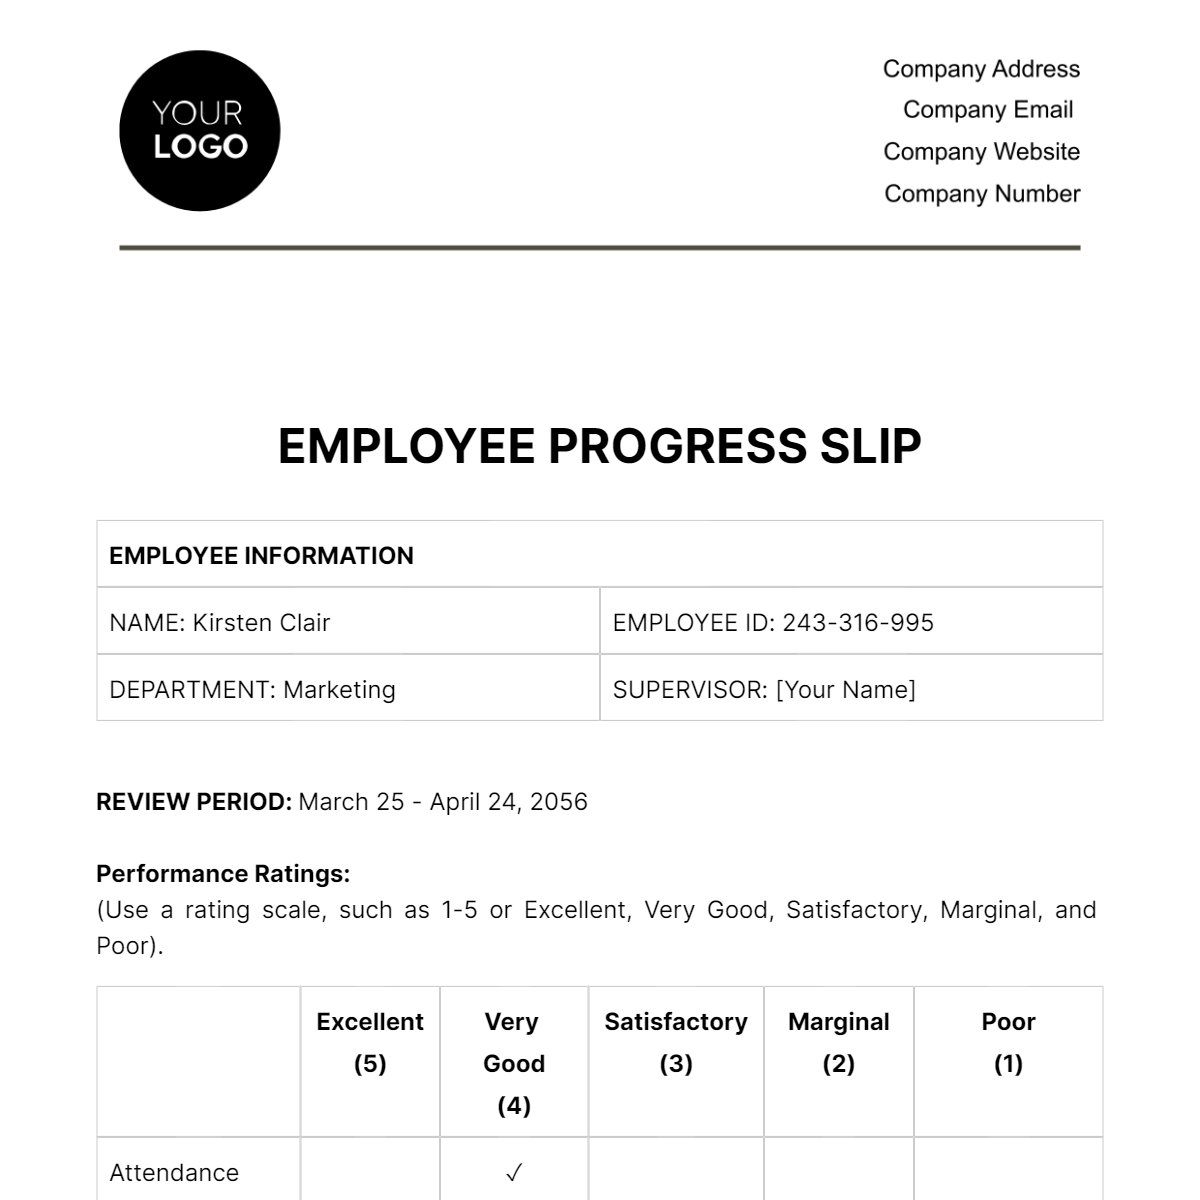 Employee Progress Slip HR Template